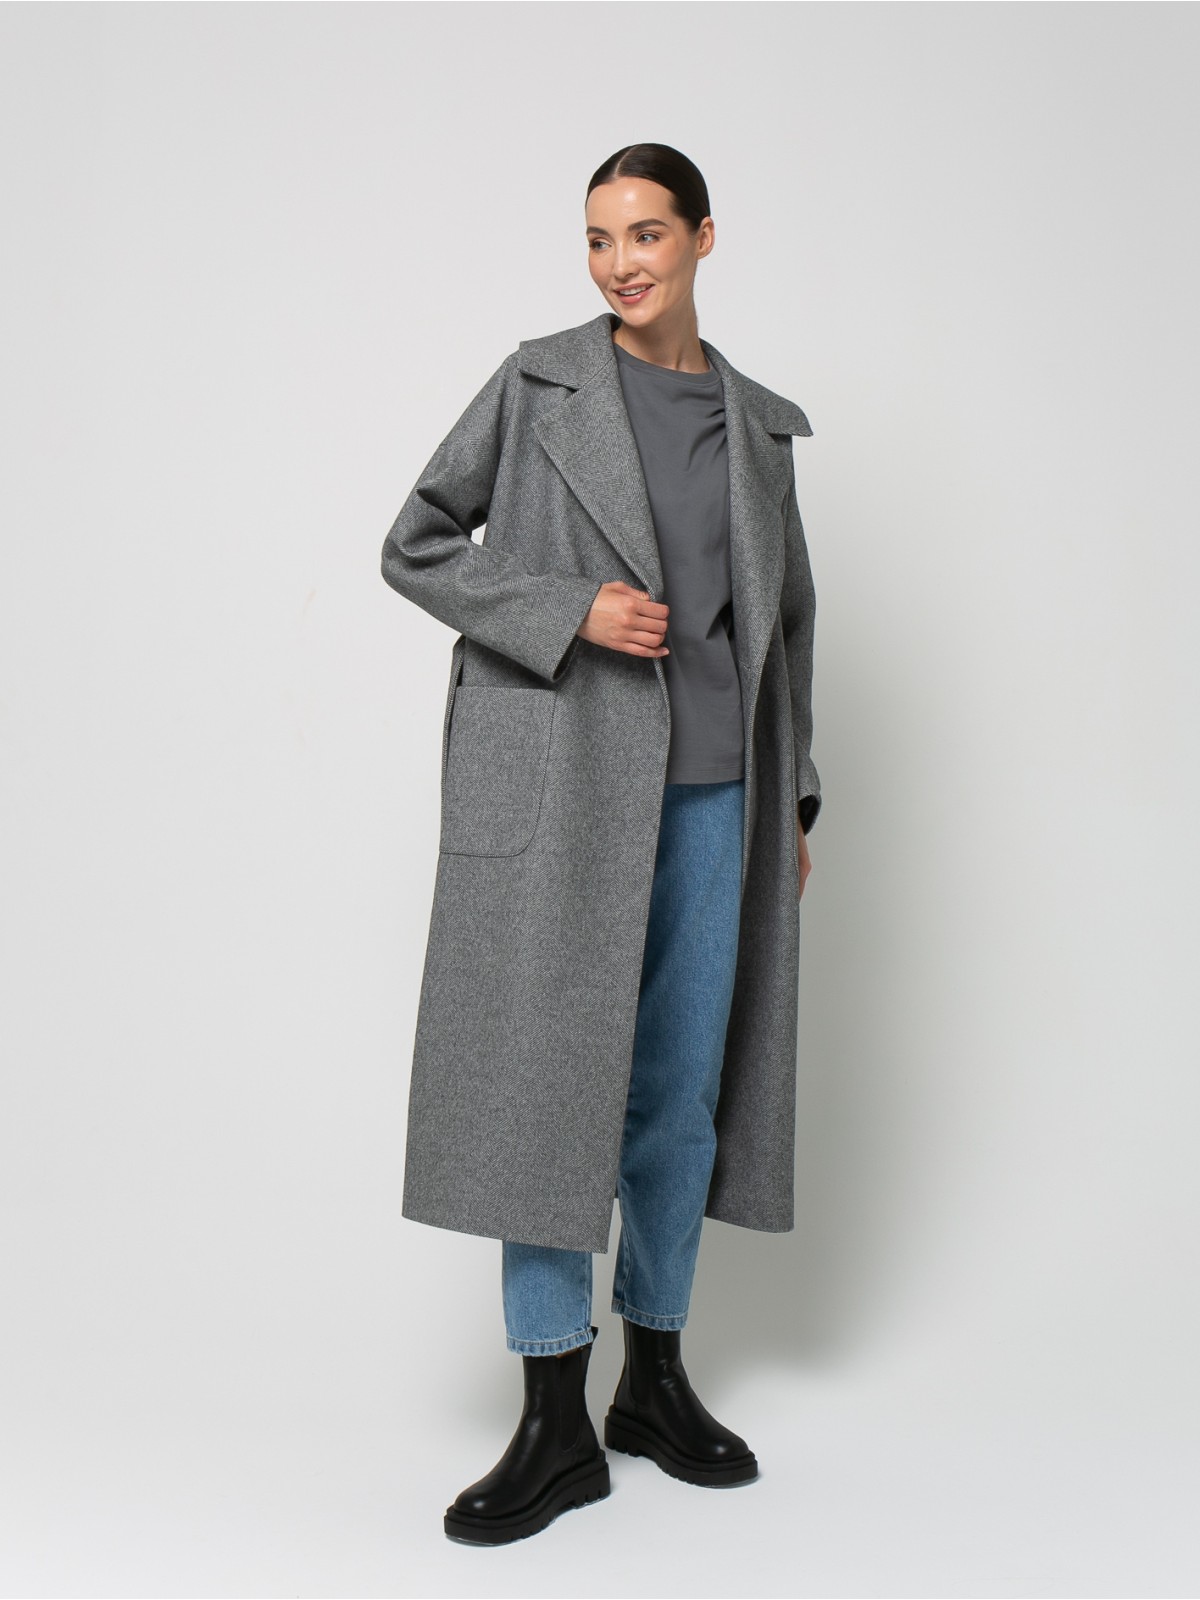 Пальто-халат на пуговицах Ash gray (Серо-бежевый)